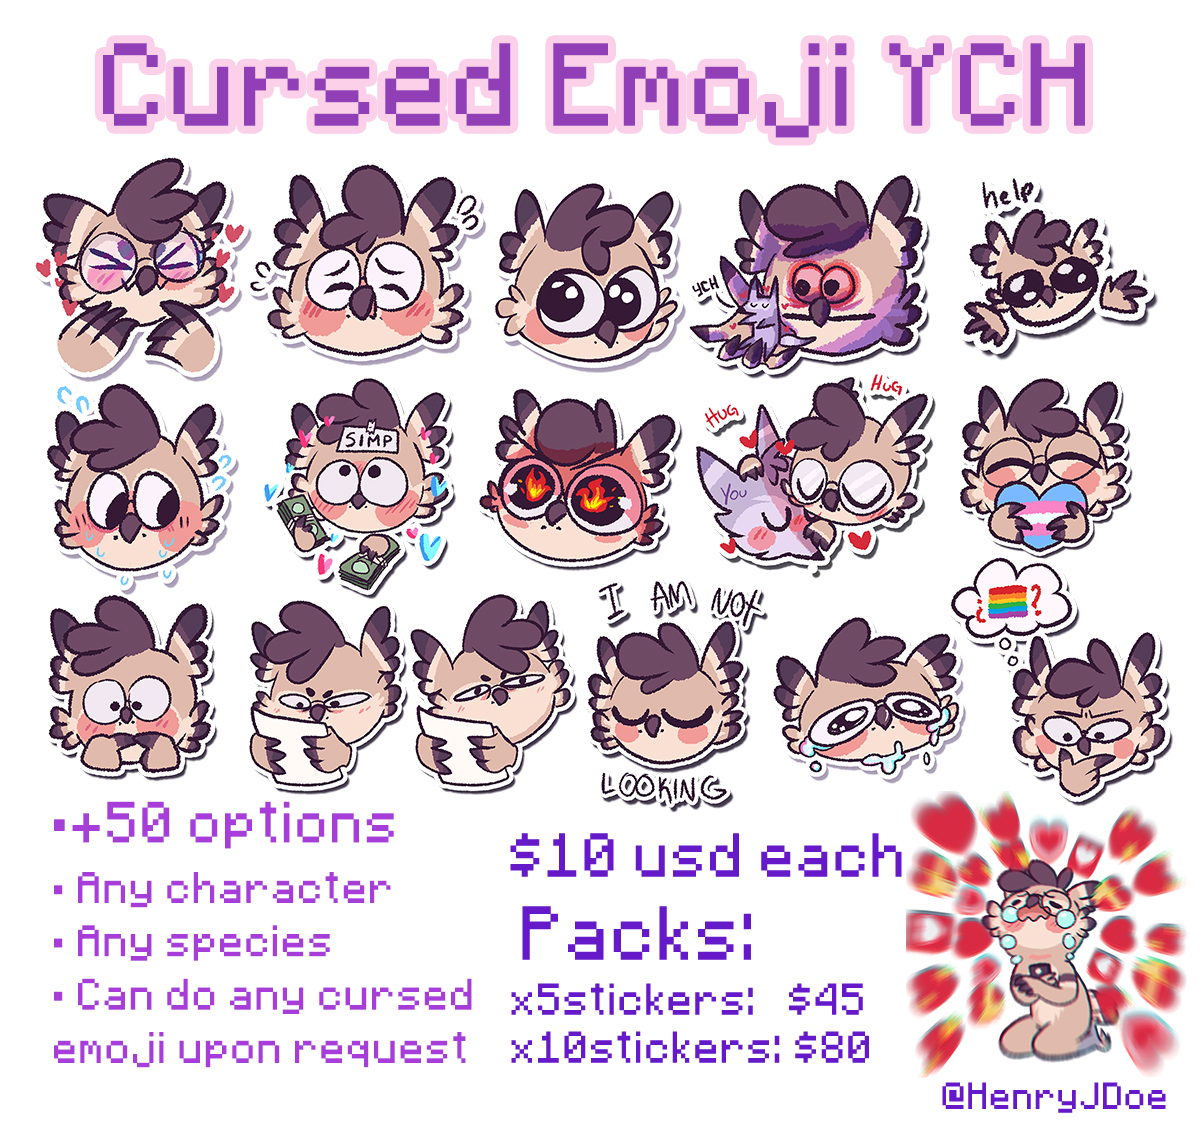 Cursed Emoji YCH by henryjdoe -- Fur Affinity [dot] net